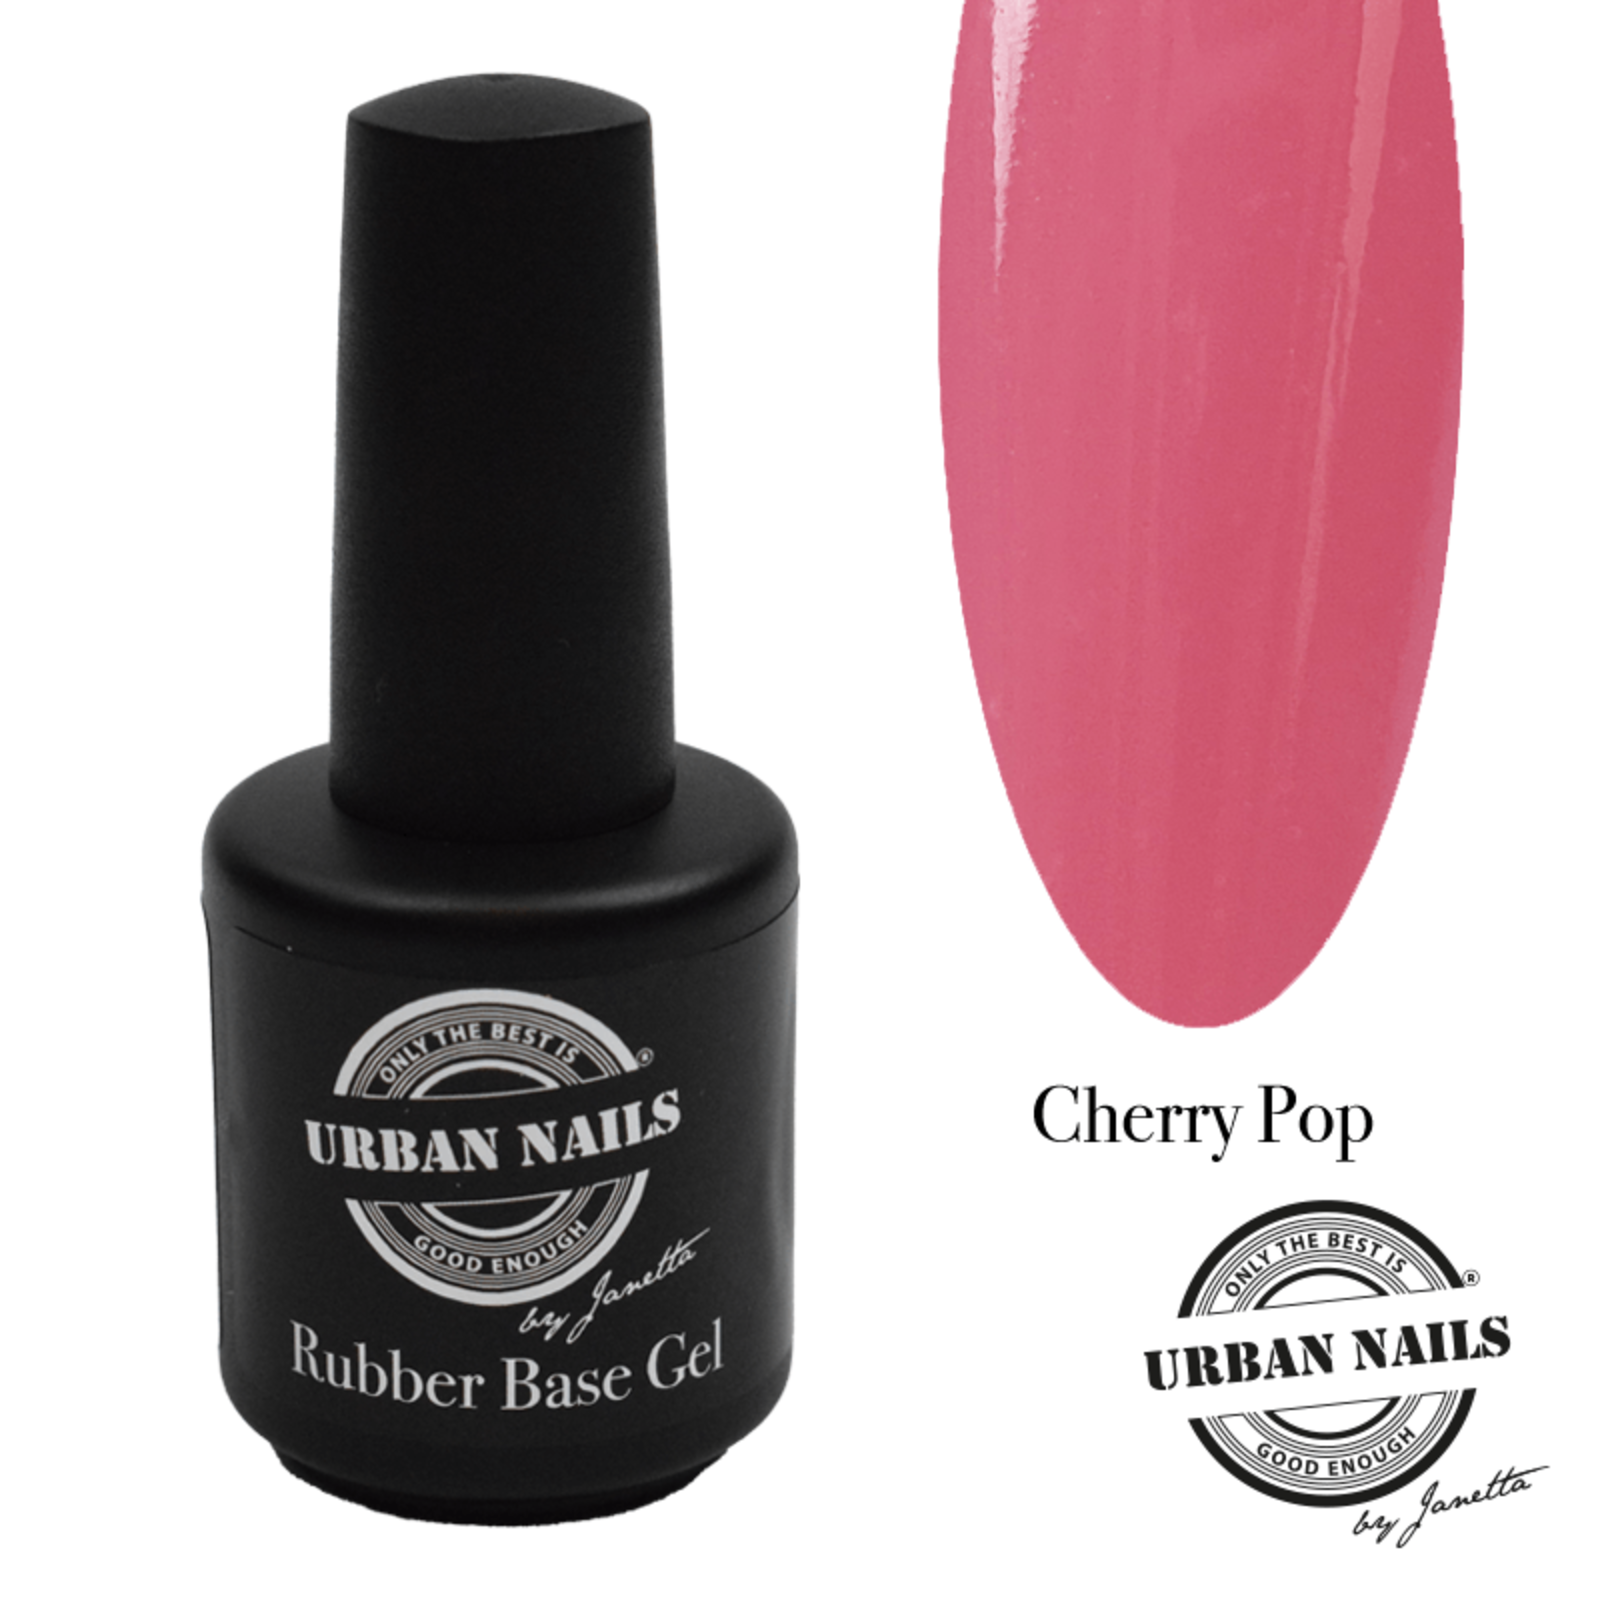 Urban nails Rubber Base Gel Cherry Pop